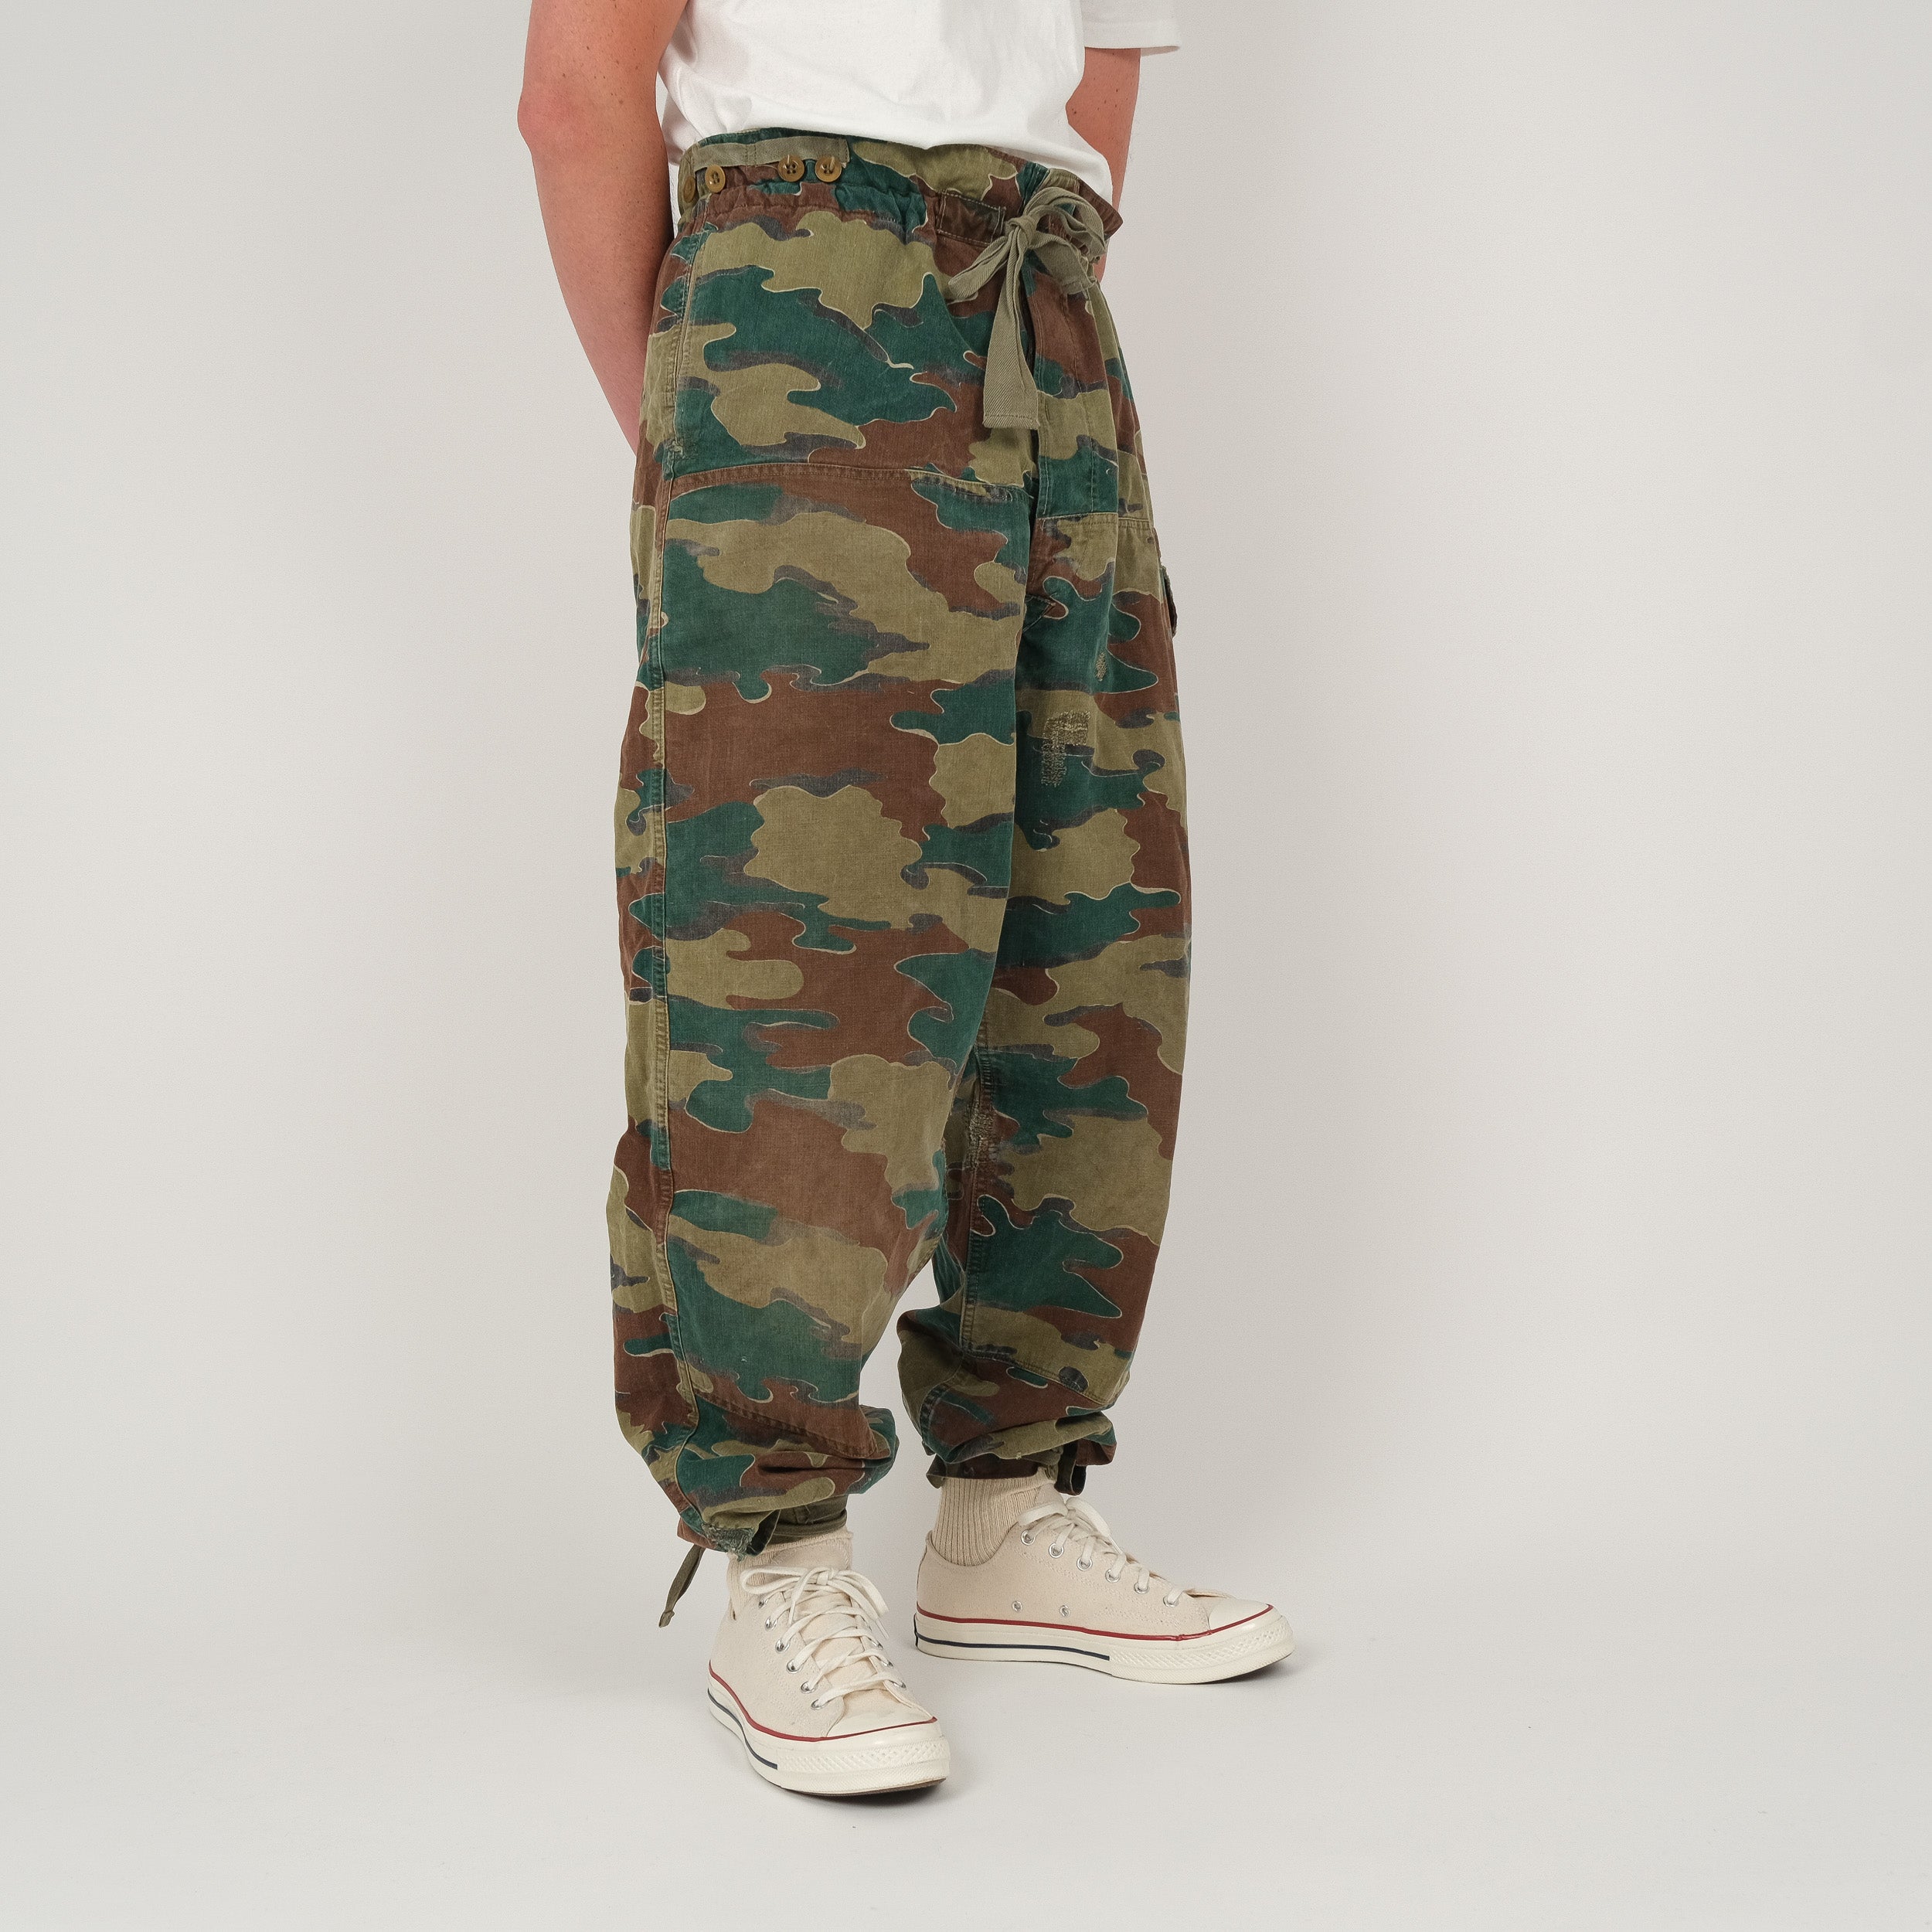 How To Wear Camo Pants? 43 Outfit Ideas | Camo pants outfit, Camouflage  outfits, Outfits with camo